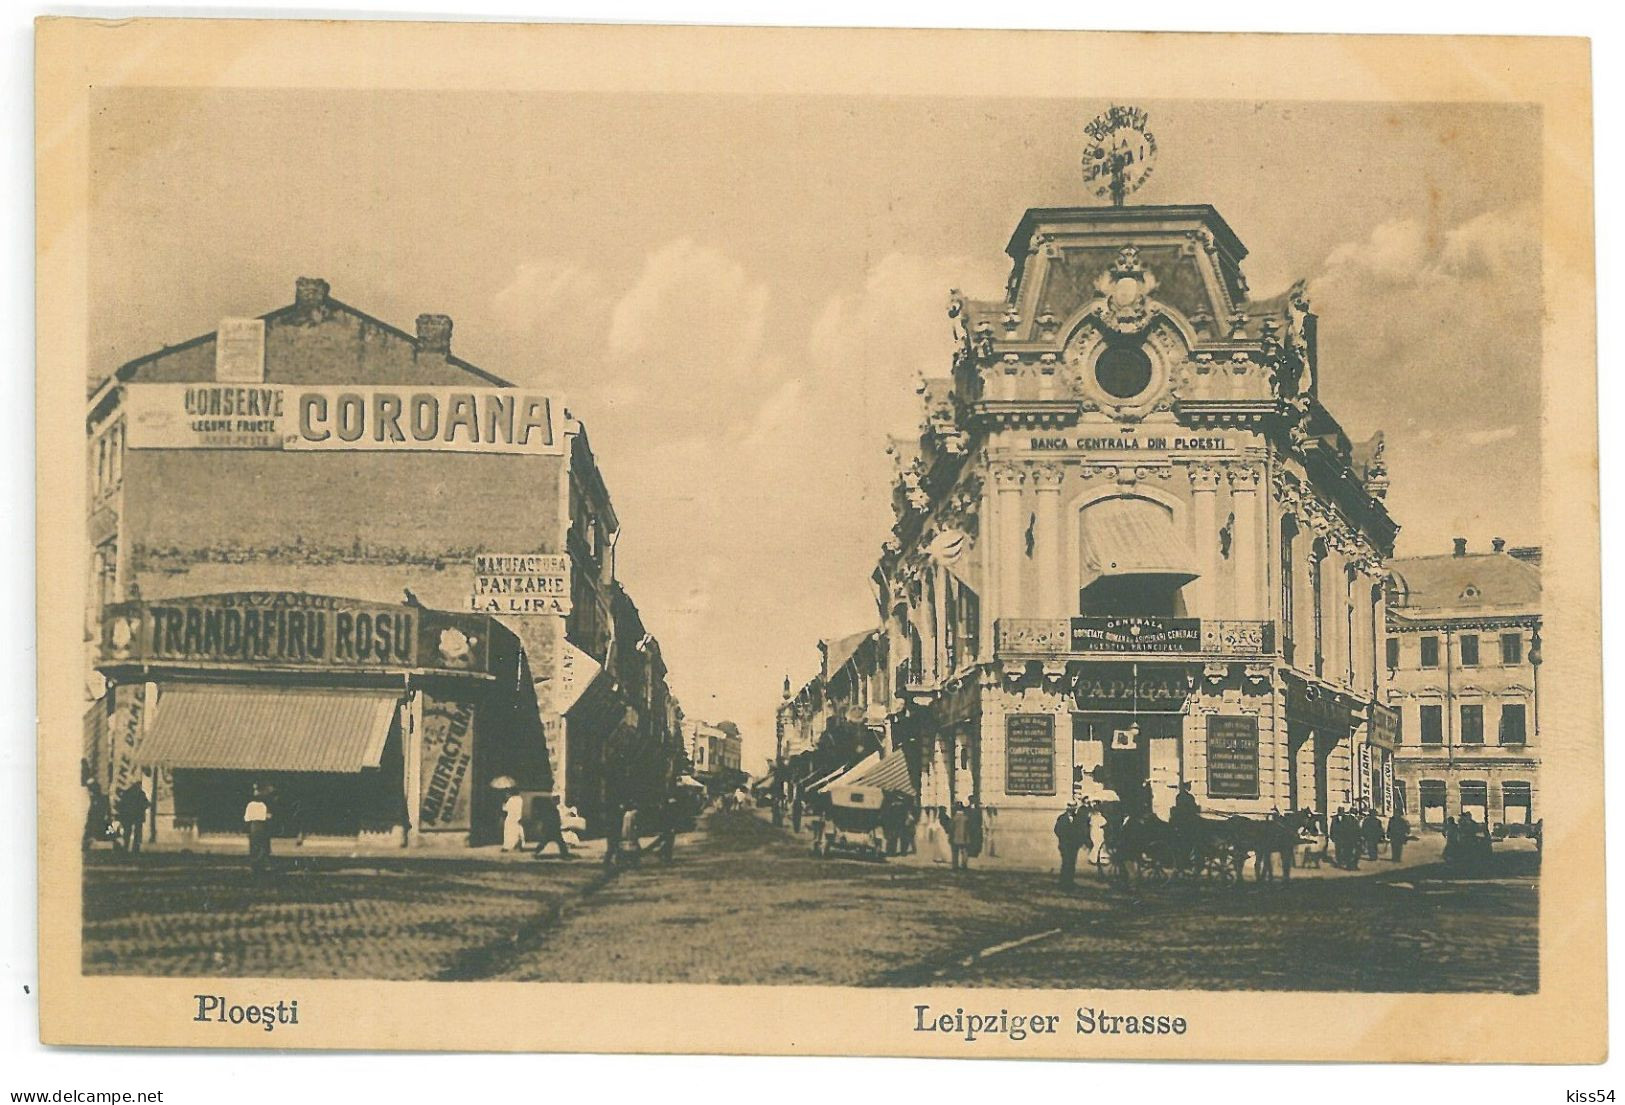 RO 47 - 25350 PLOIESTI, Market, Bazar, Romania - Old Postcard - Unused - Romania